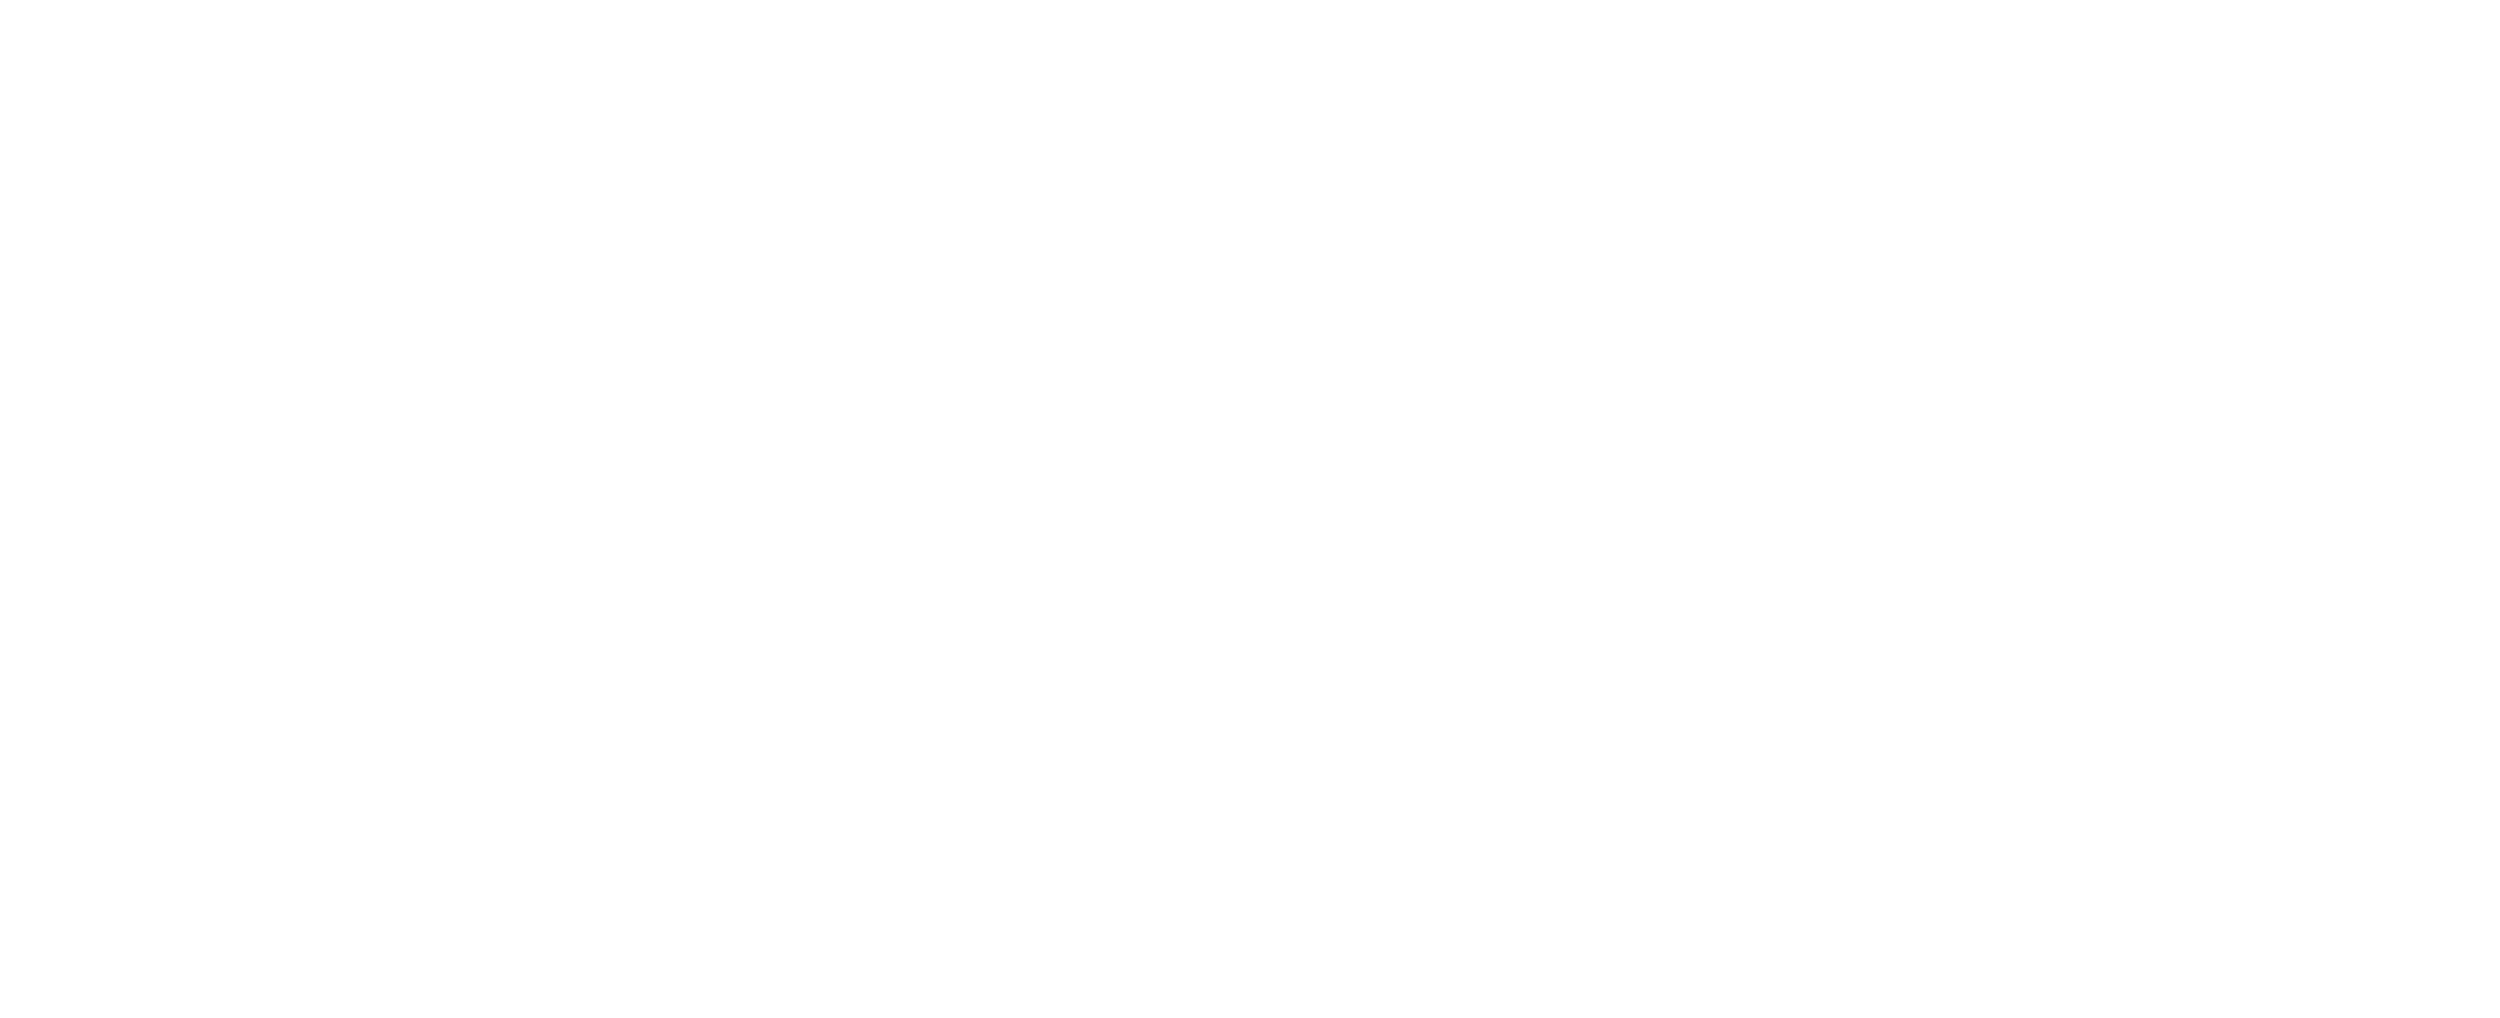 AIRE Athletic Training